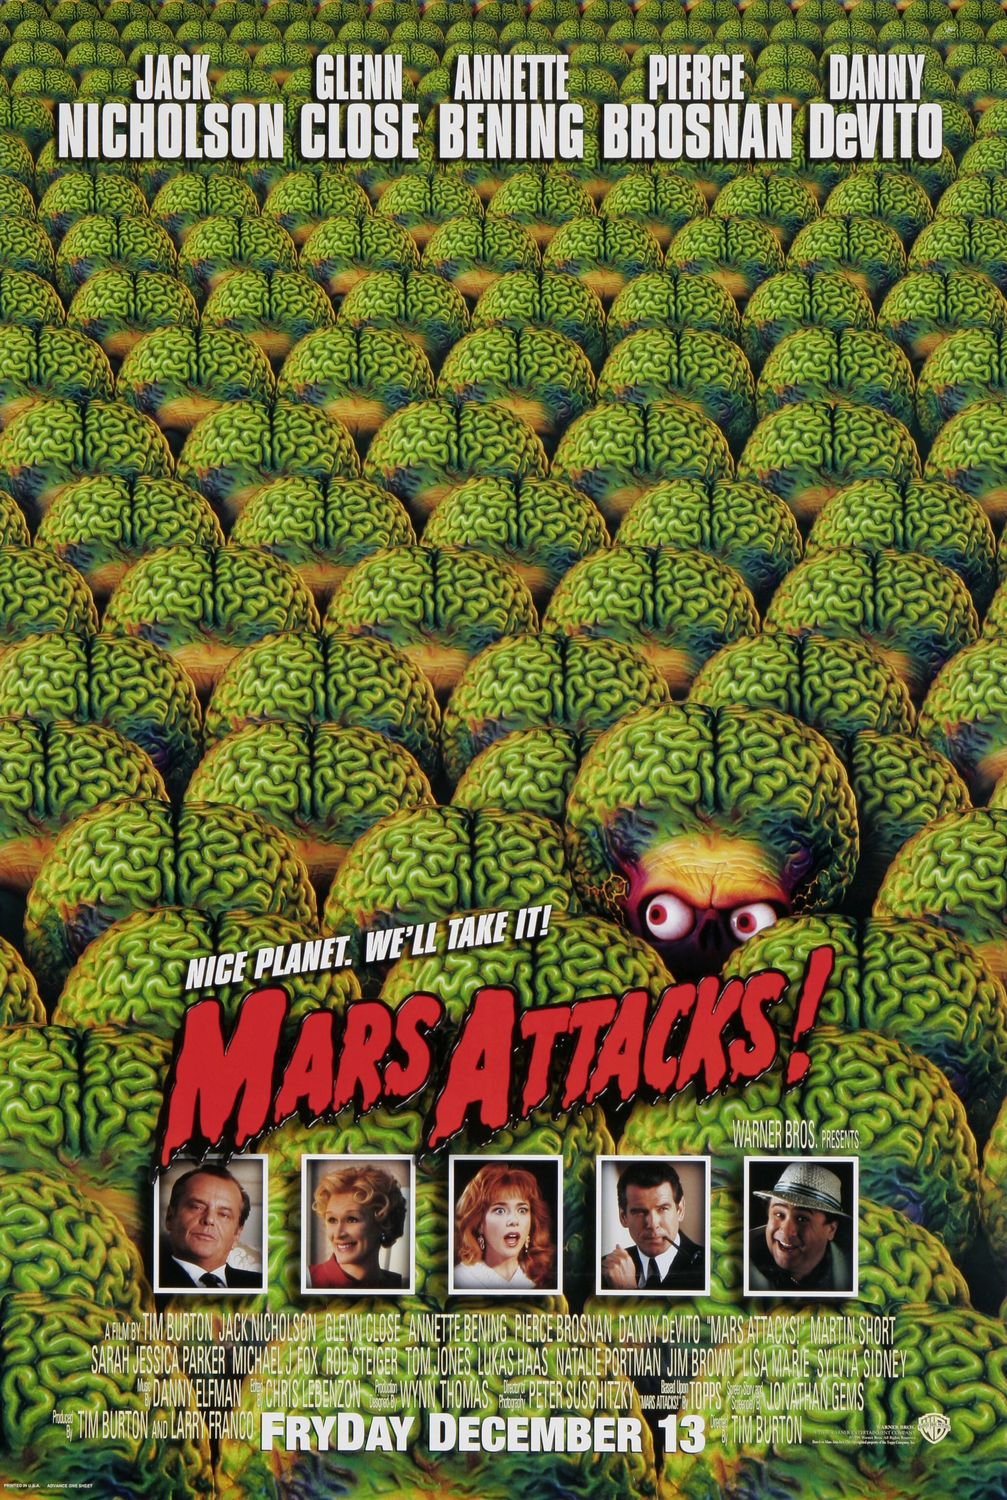 SPACE WARS FEBRUARY 1978 Mars Attacks, Sci-Fi Film Spectacular